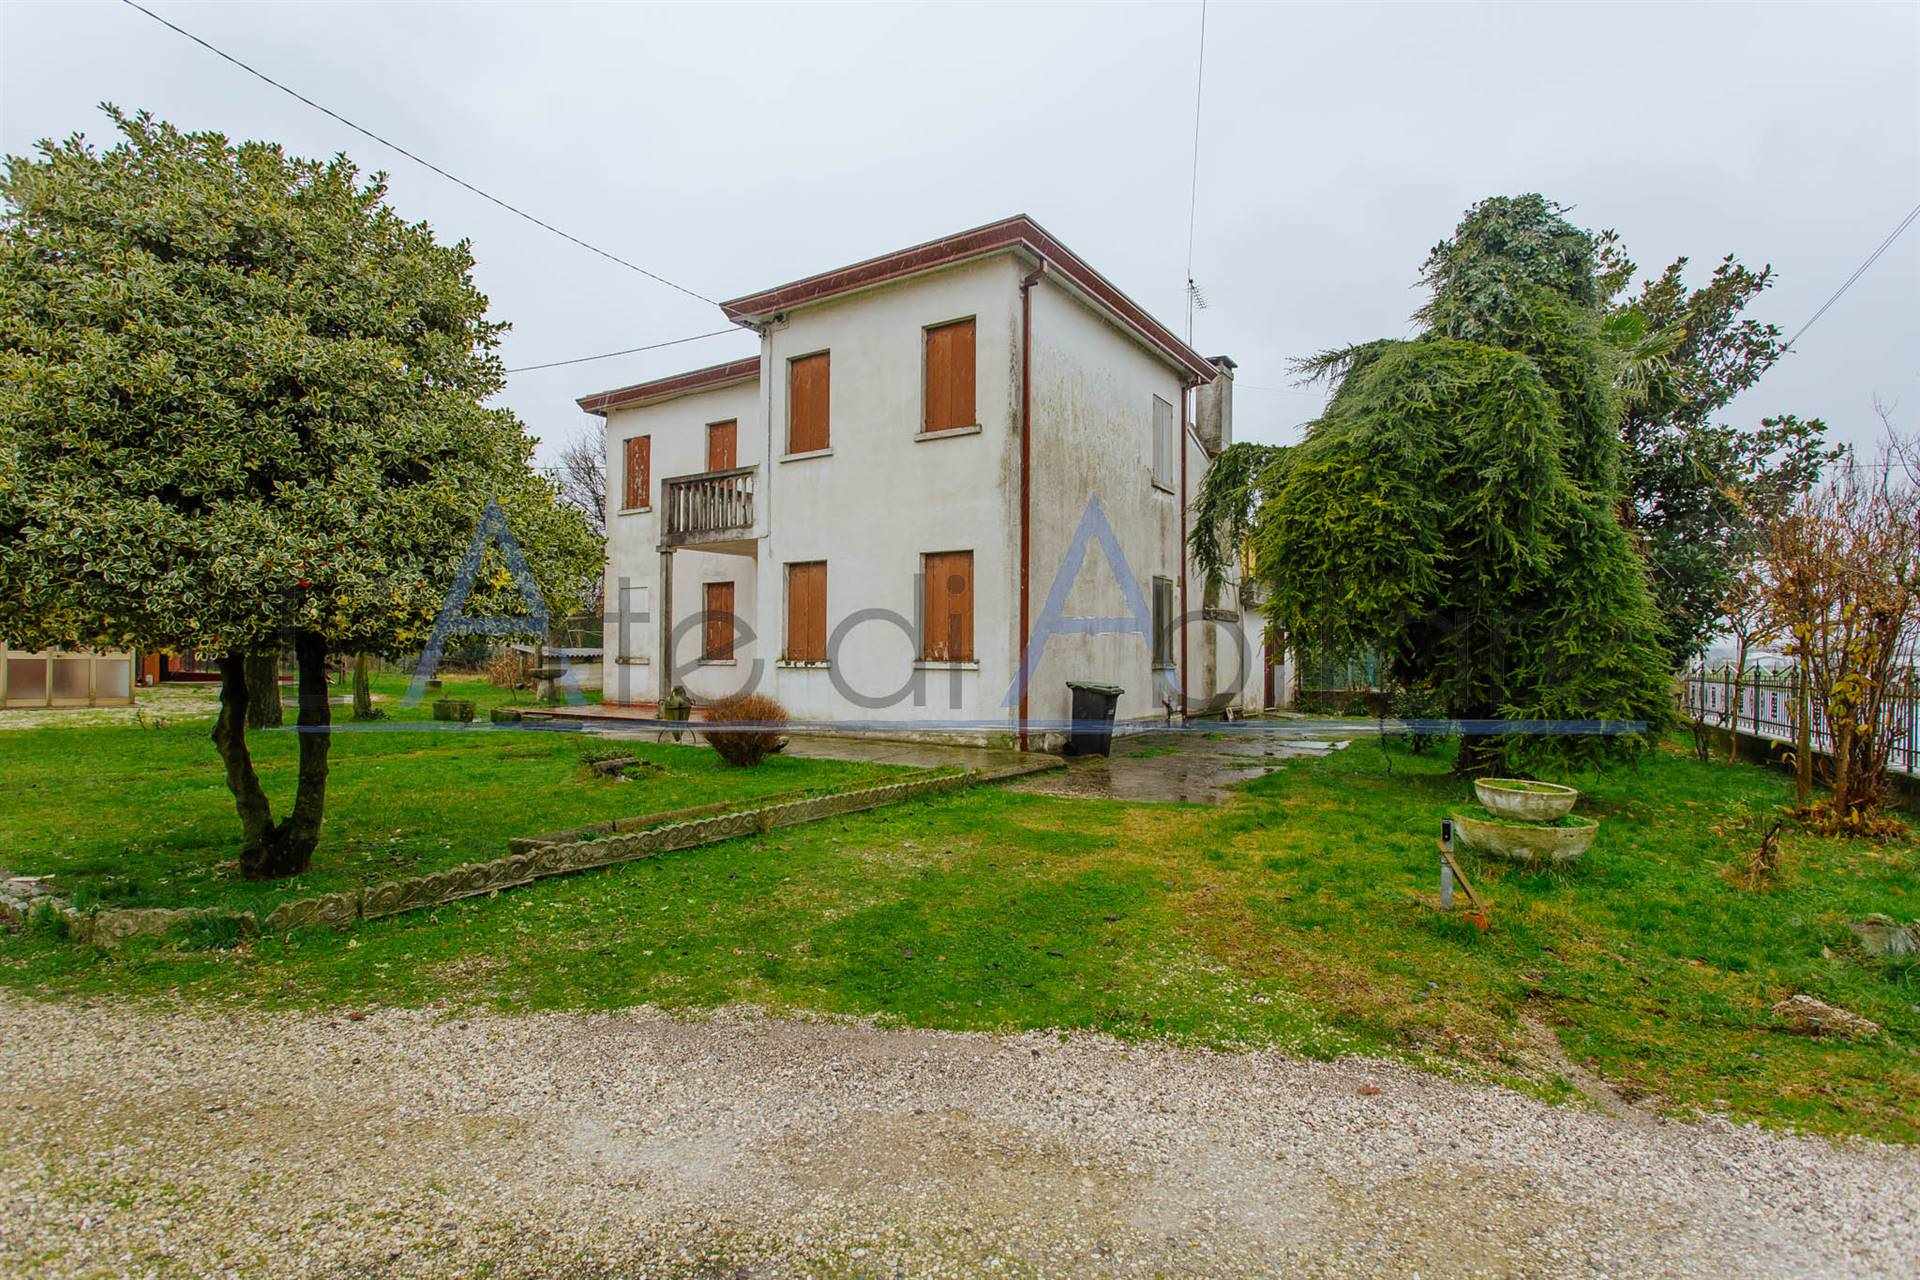 Casa singola in Via Roma 1 a Arzergrande